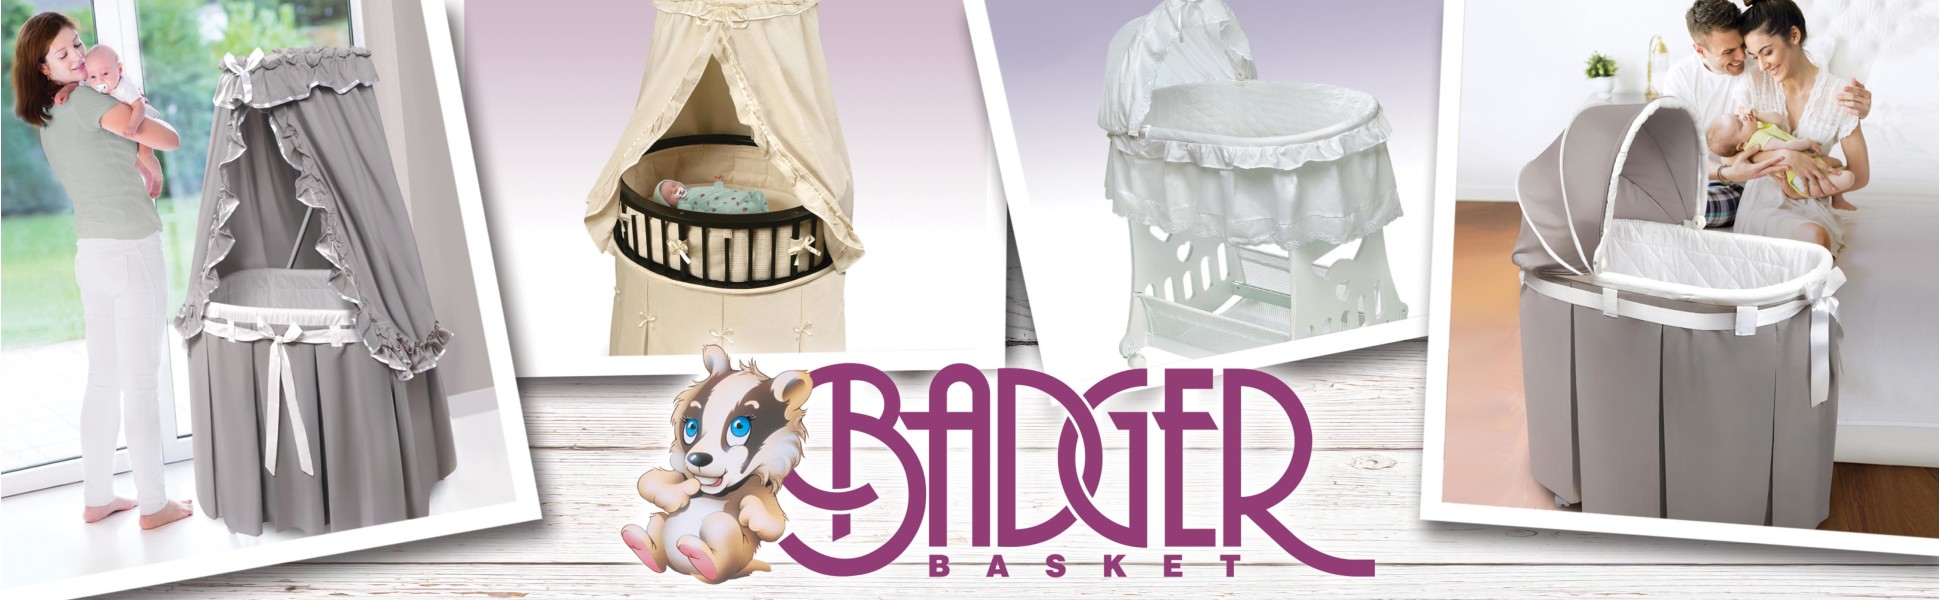 Badger Basket Wicker-Look Woven Baby Moses Changing Basket - Espresso/Ecru  